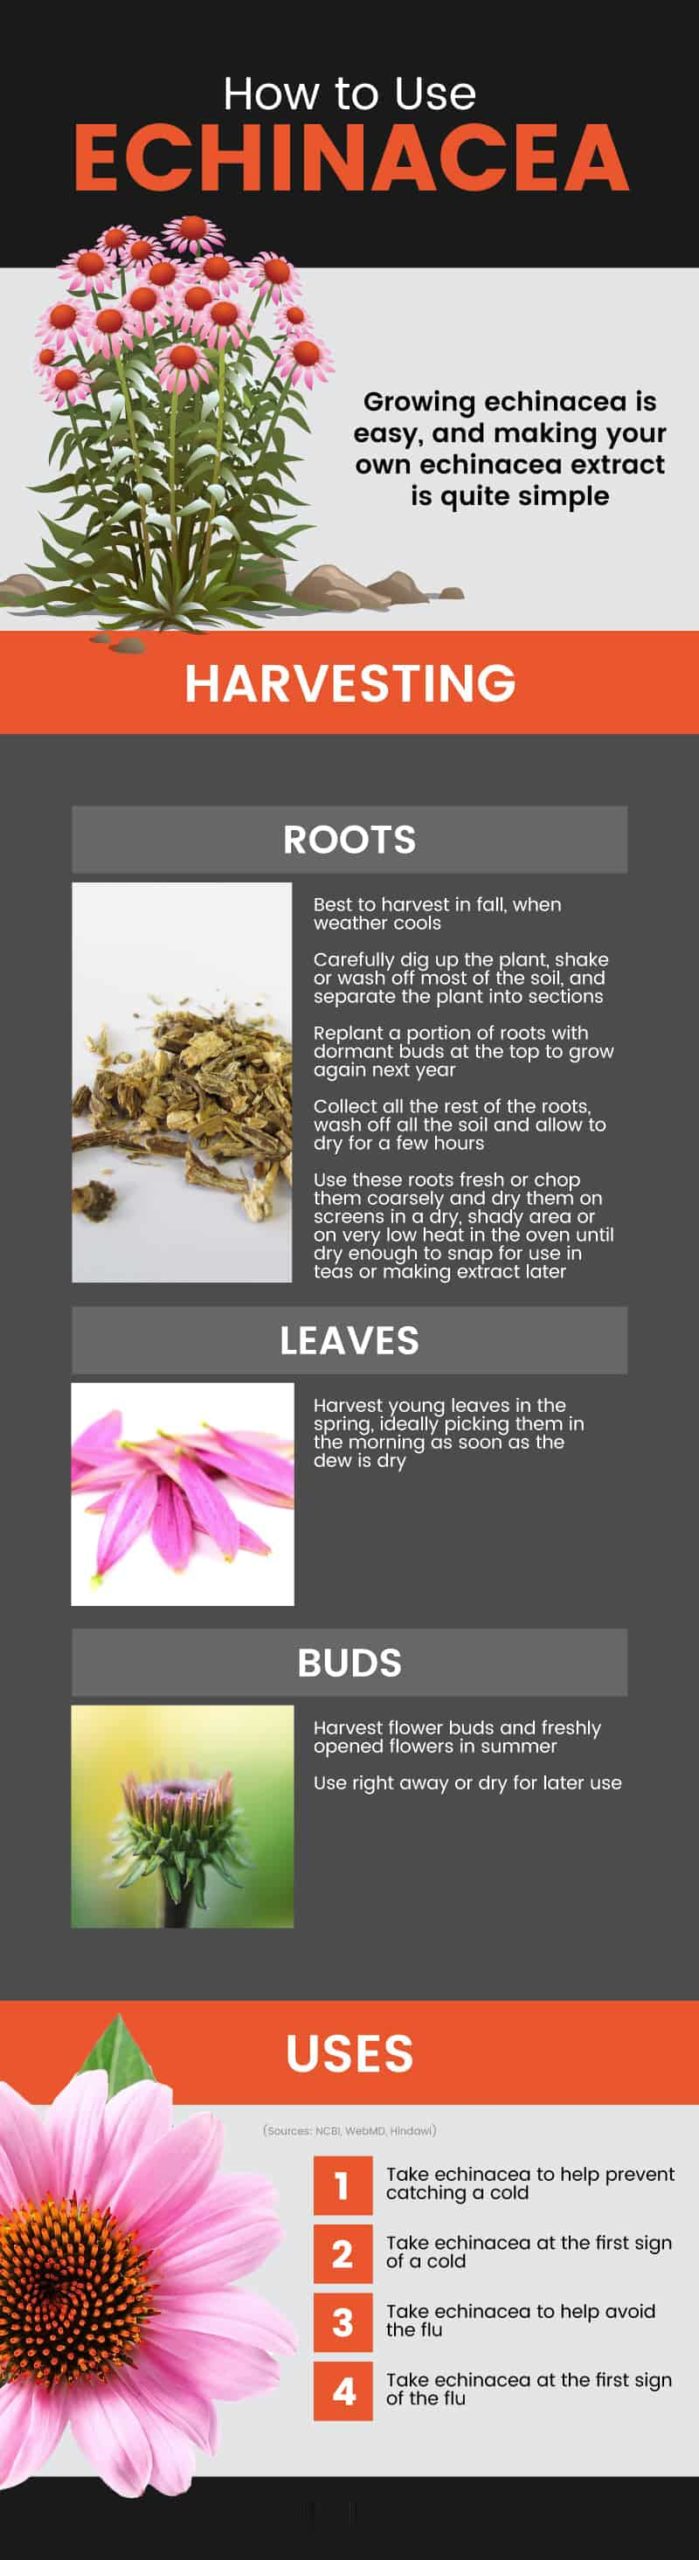 Echinacea uses